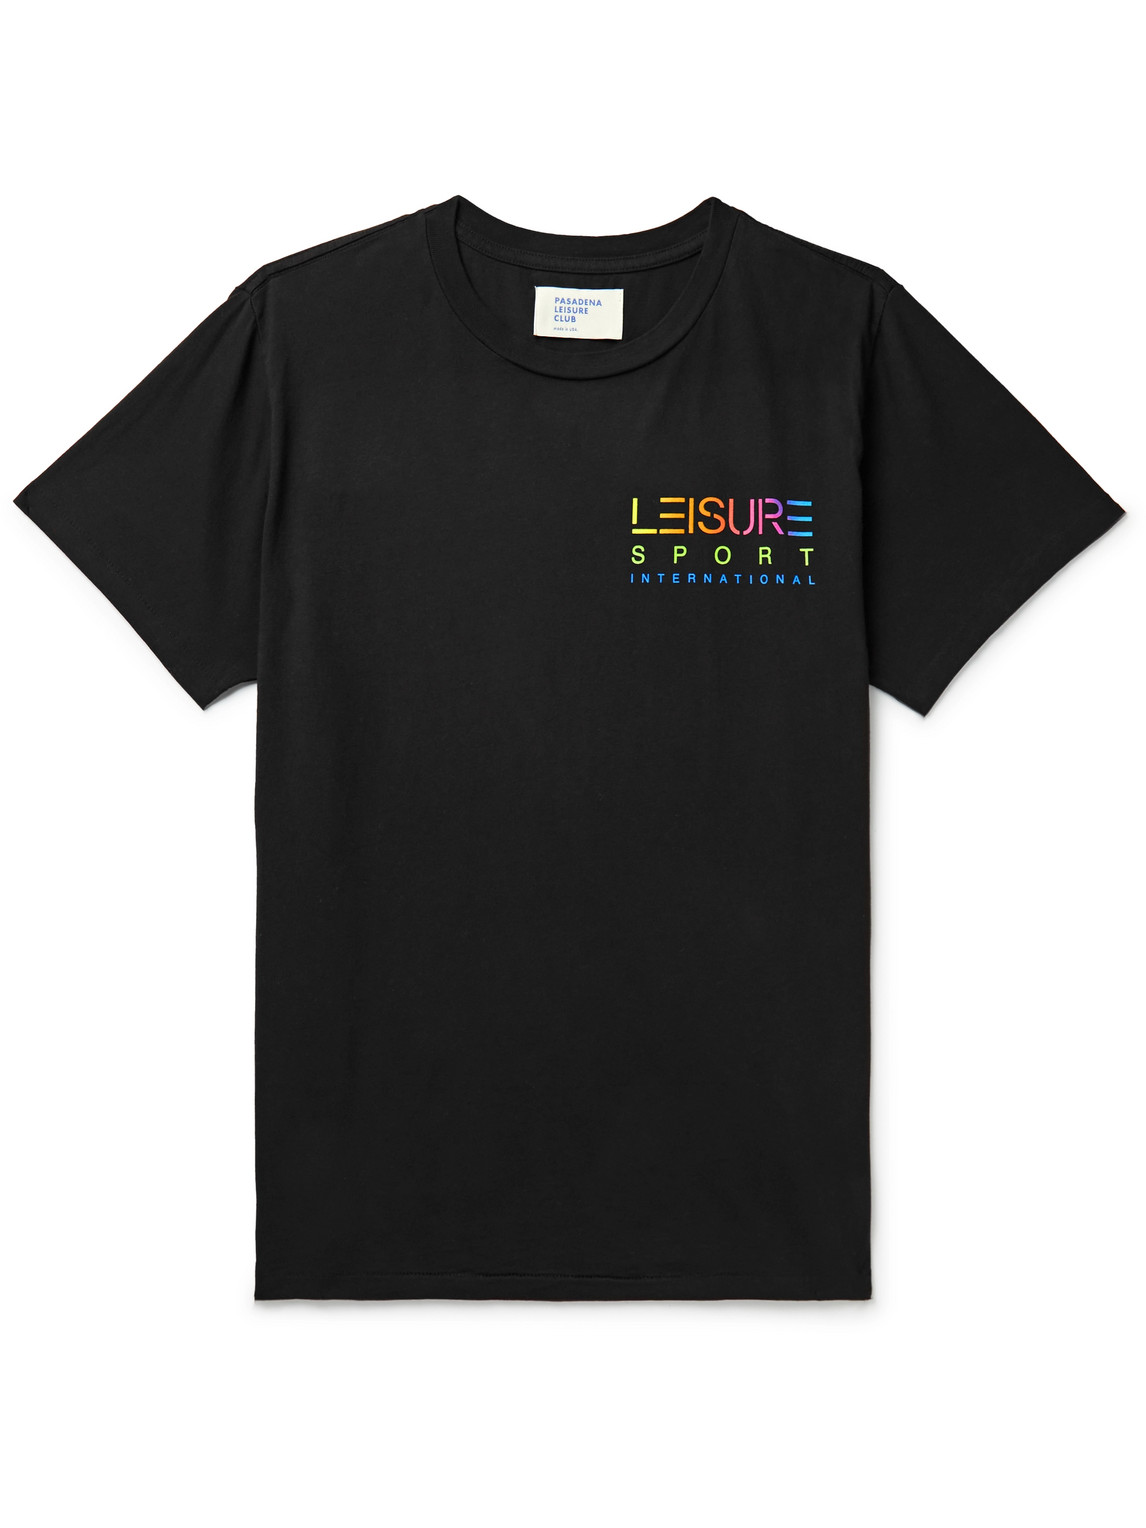 Pasadena Leisure Club International Printed Cotton-jersey T-shirt In Black